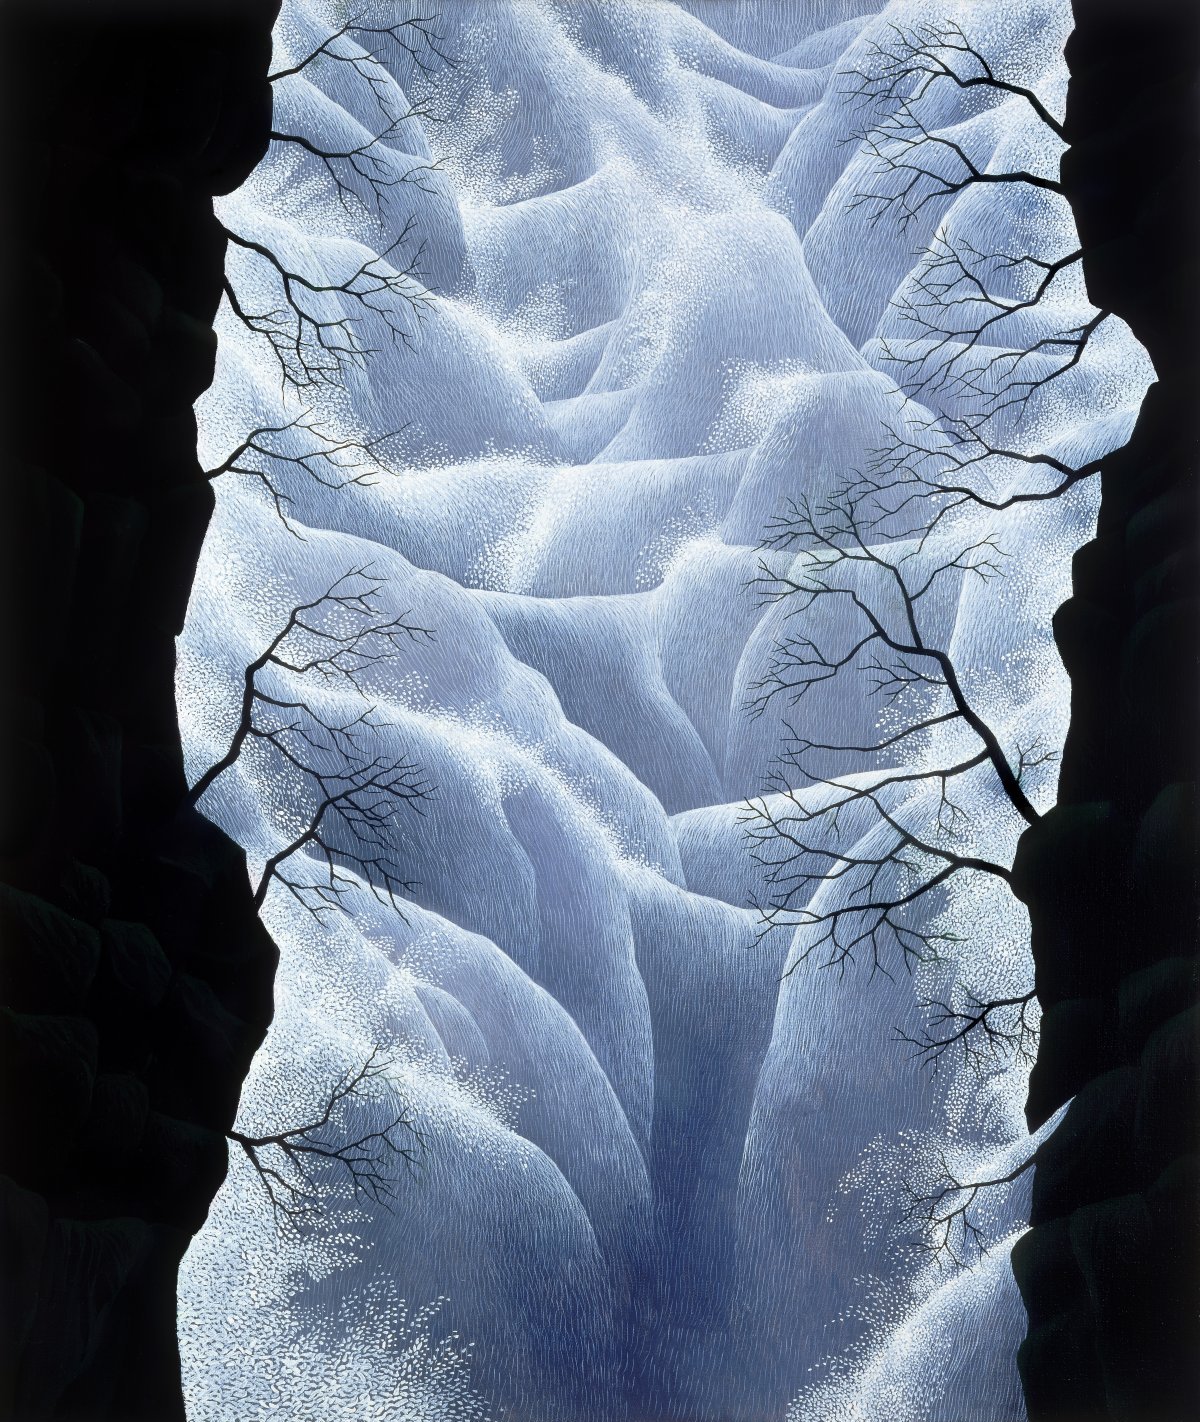 Bruno Epple, Wasserfallpracht, 60x50 cm, 2000, Öl auf Leinwand